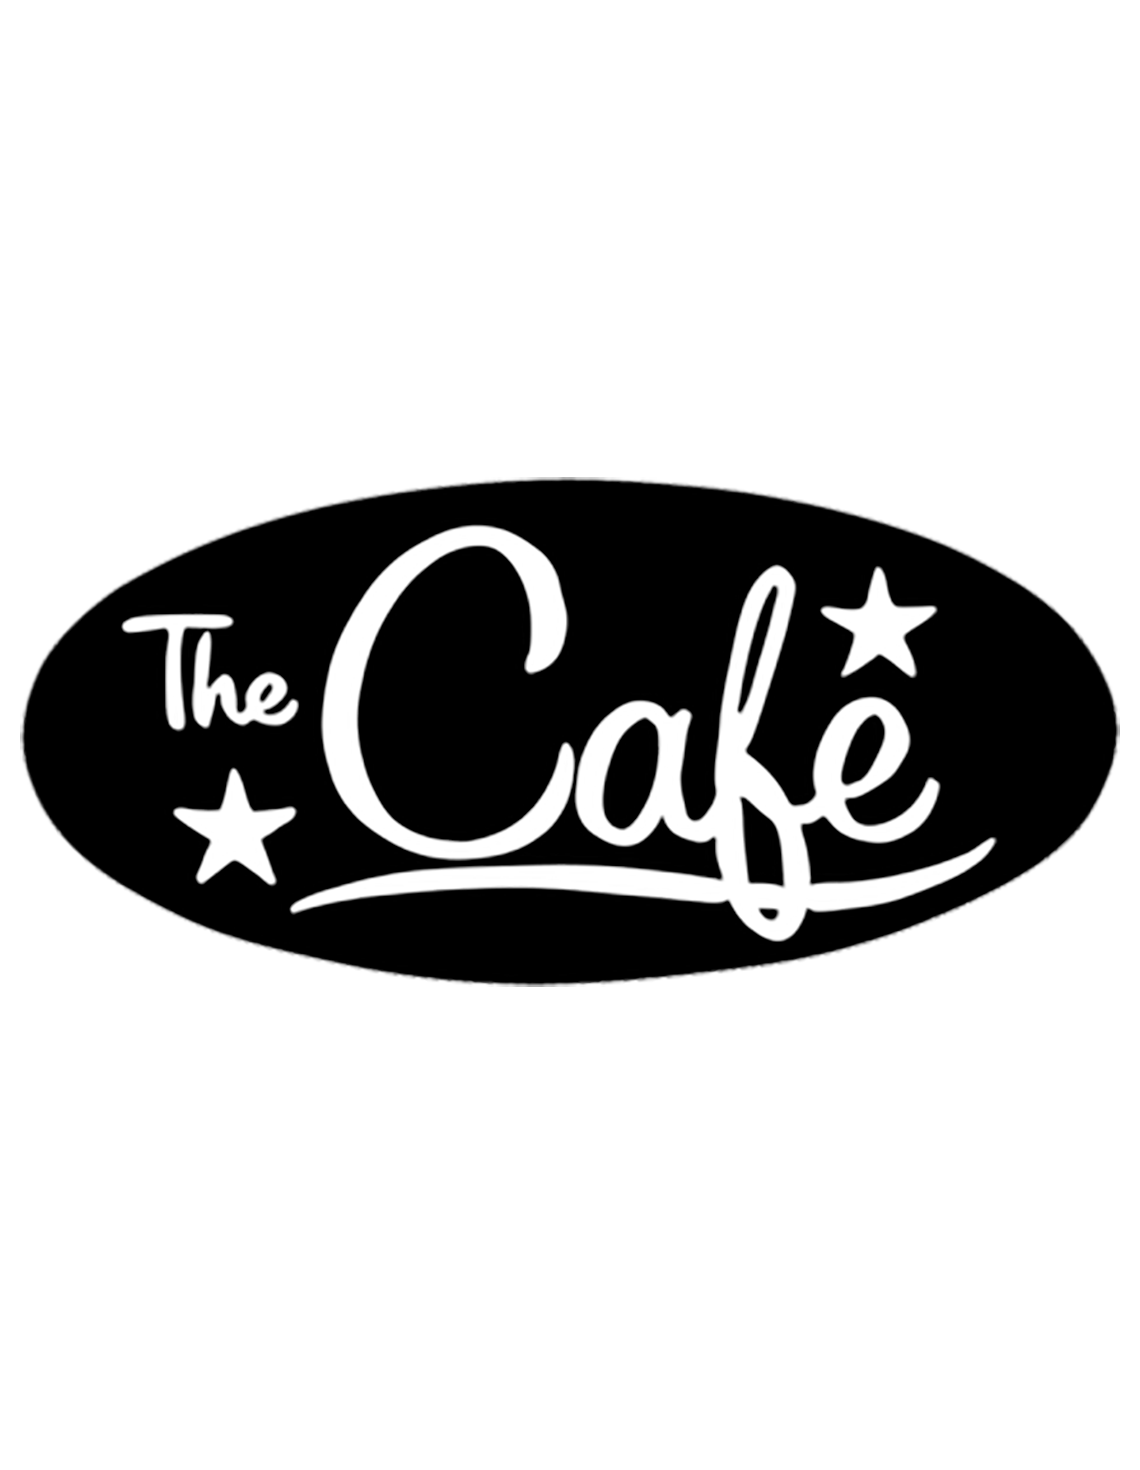 The Café logo